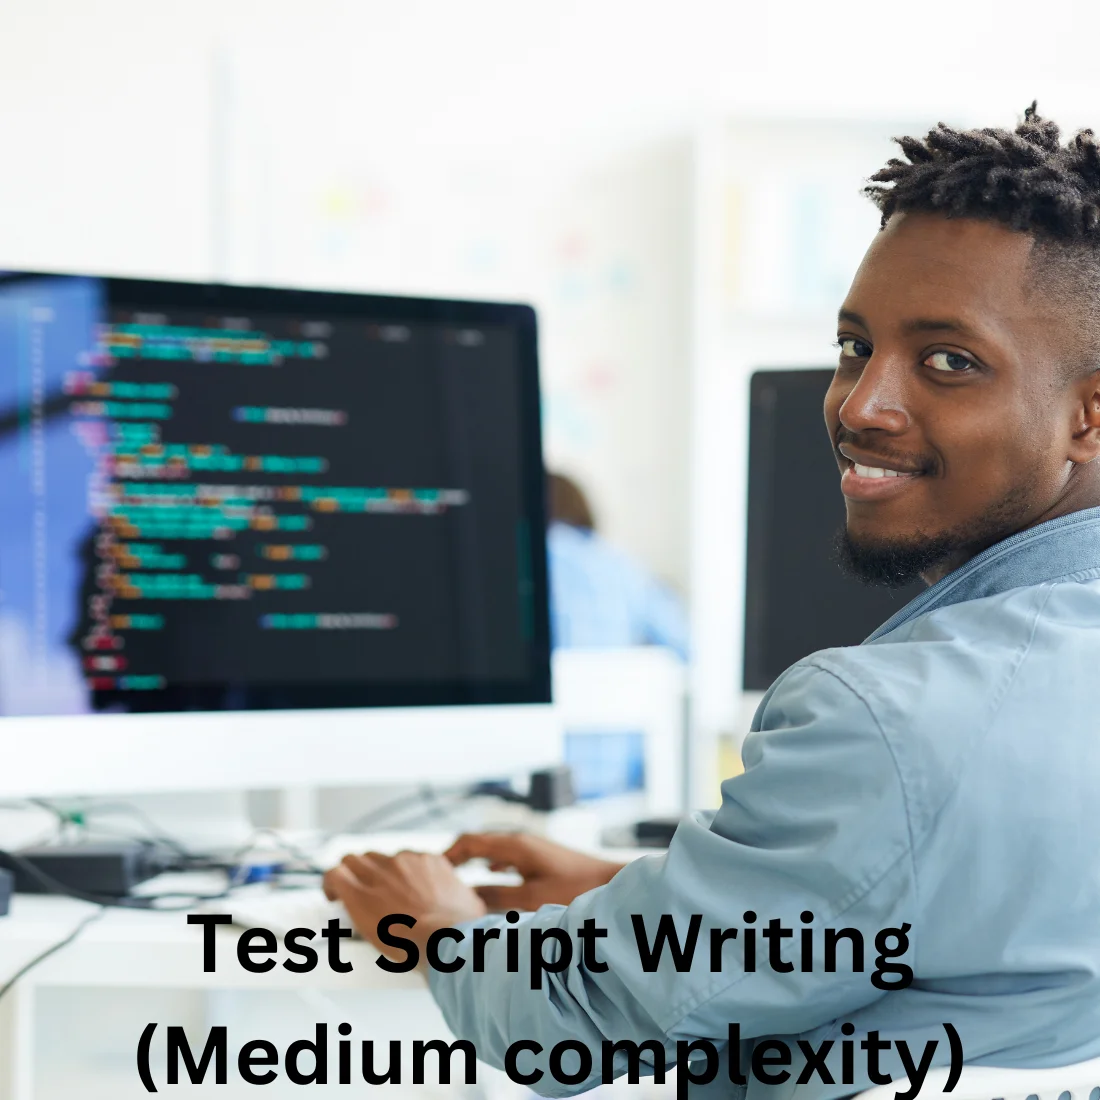 Test Script Writing (Medium complexity)